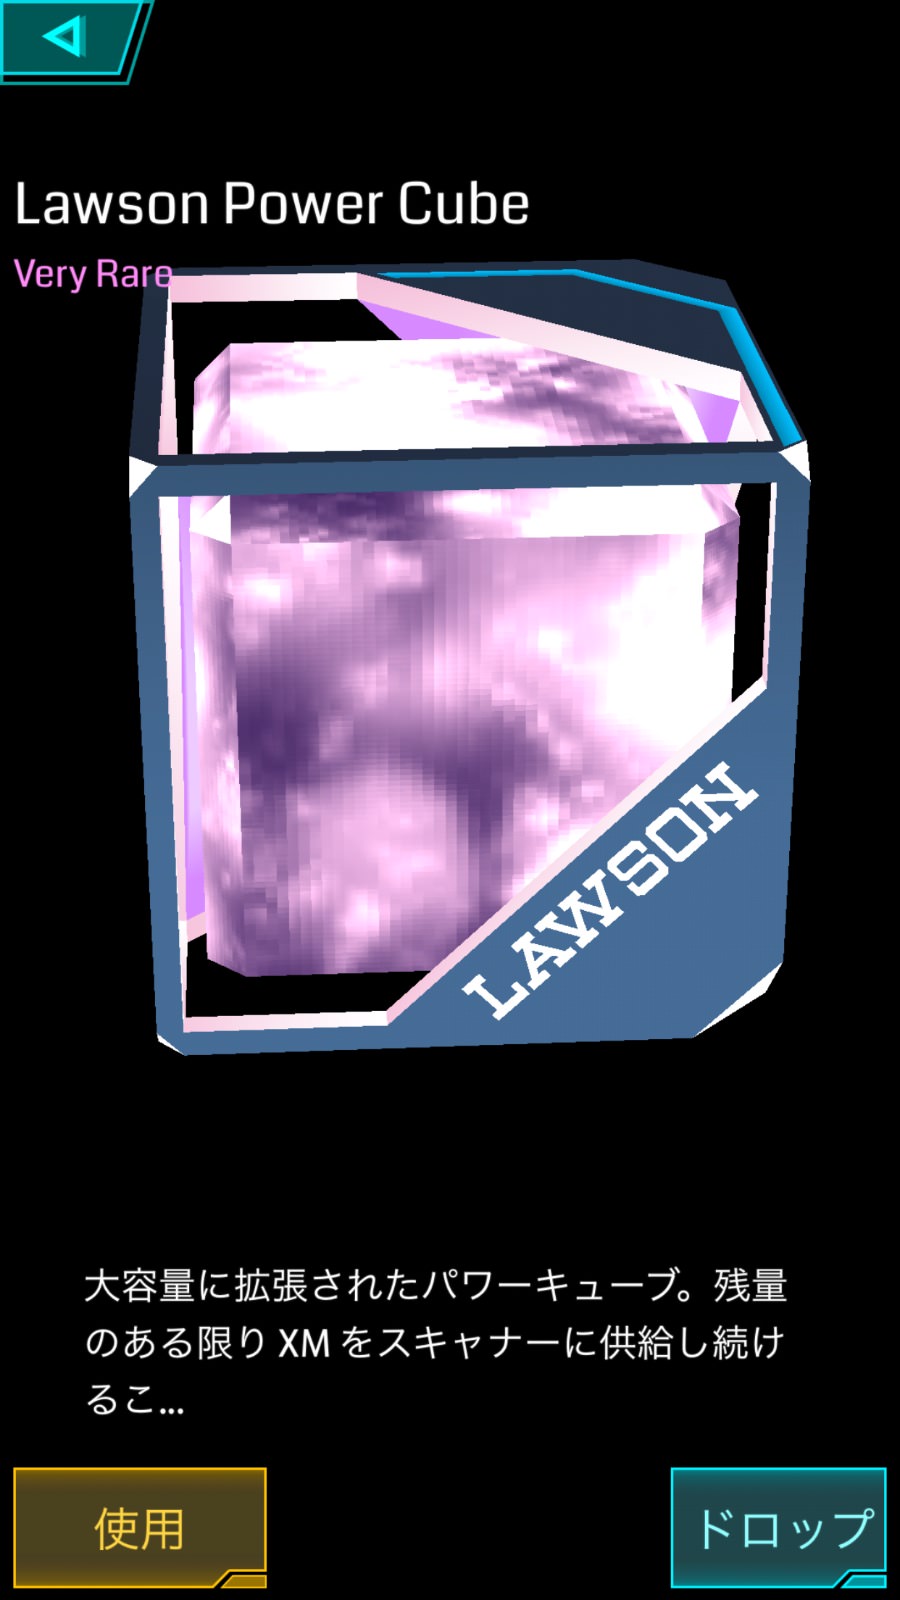 Ingress lawson power cube 1675